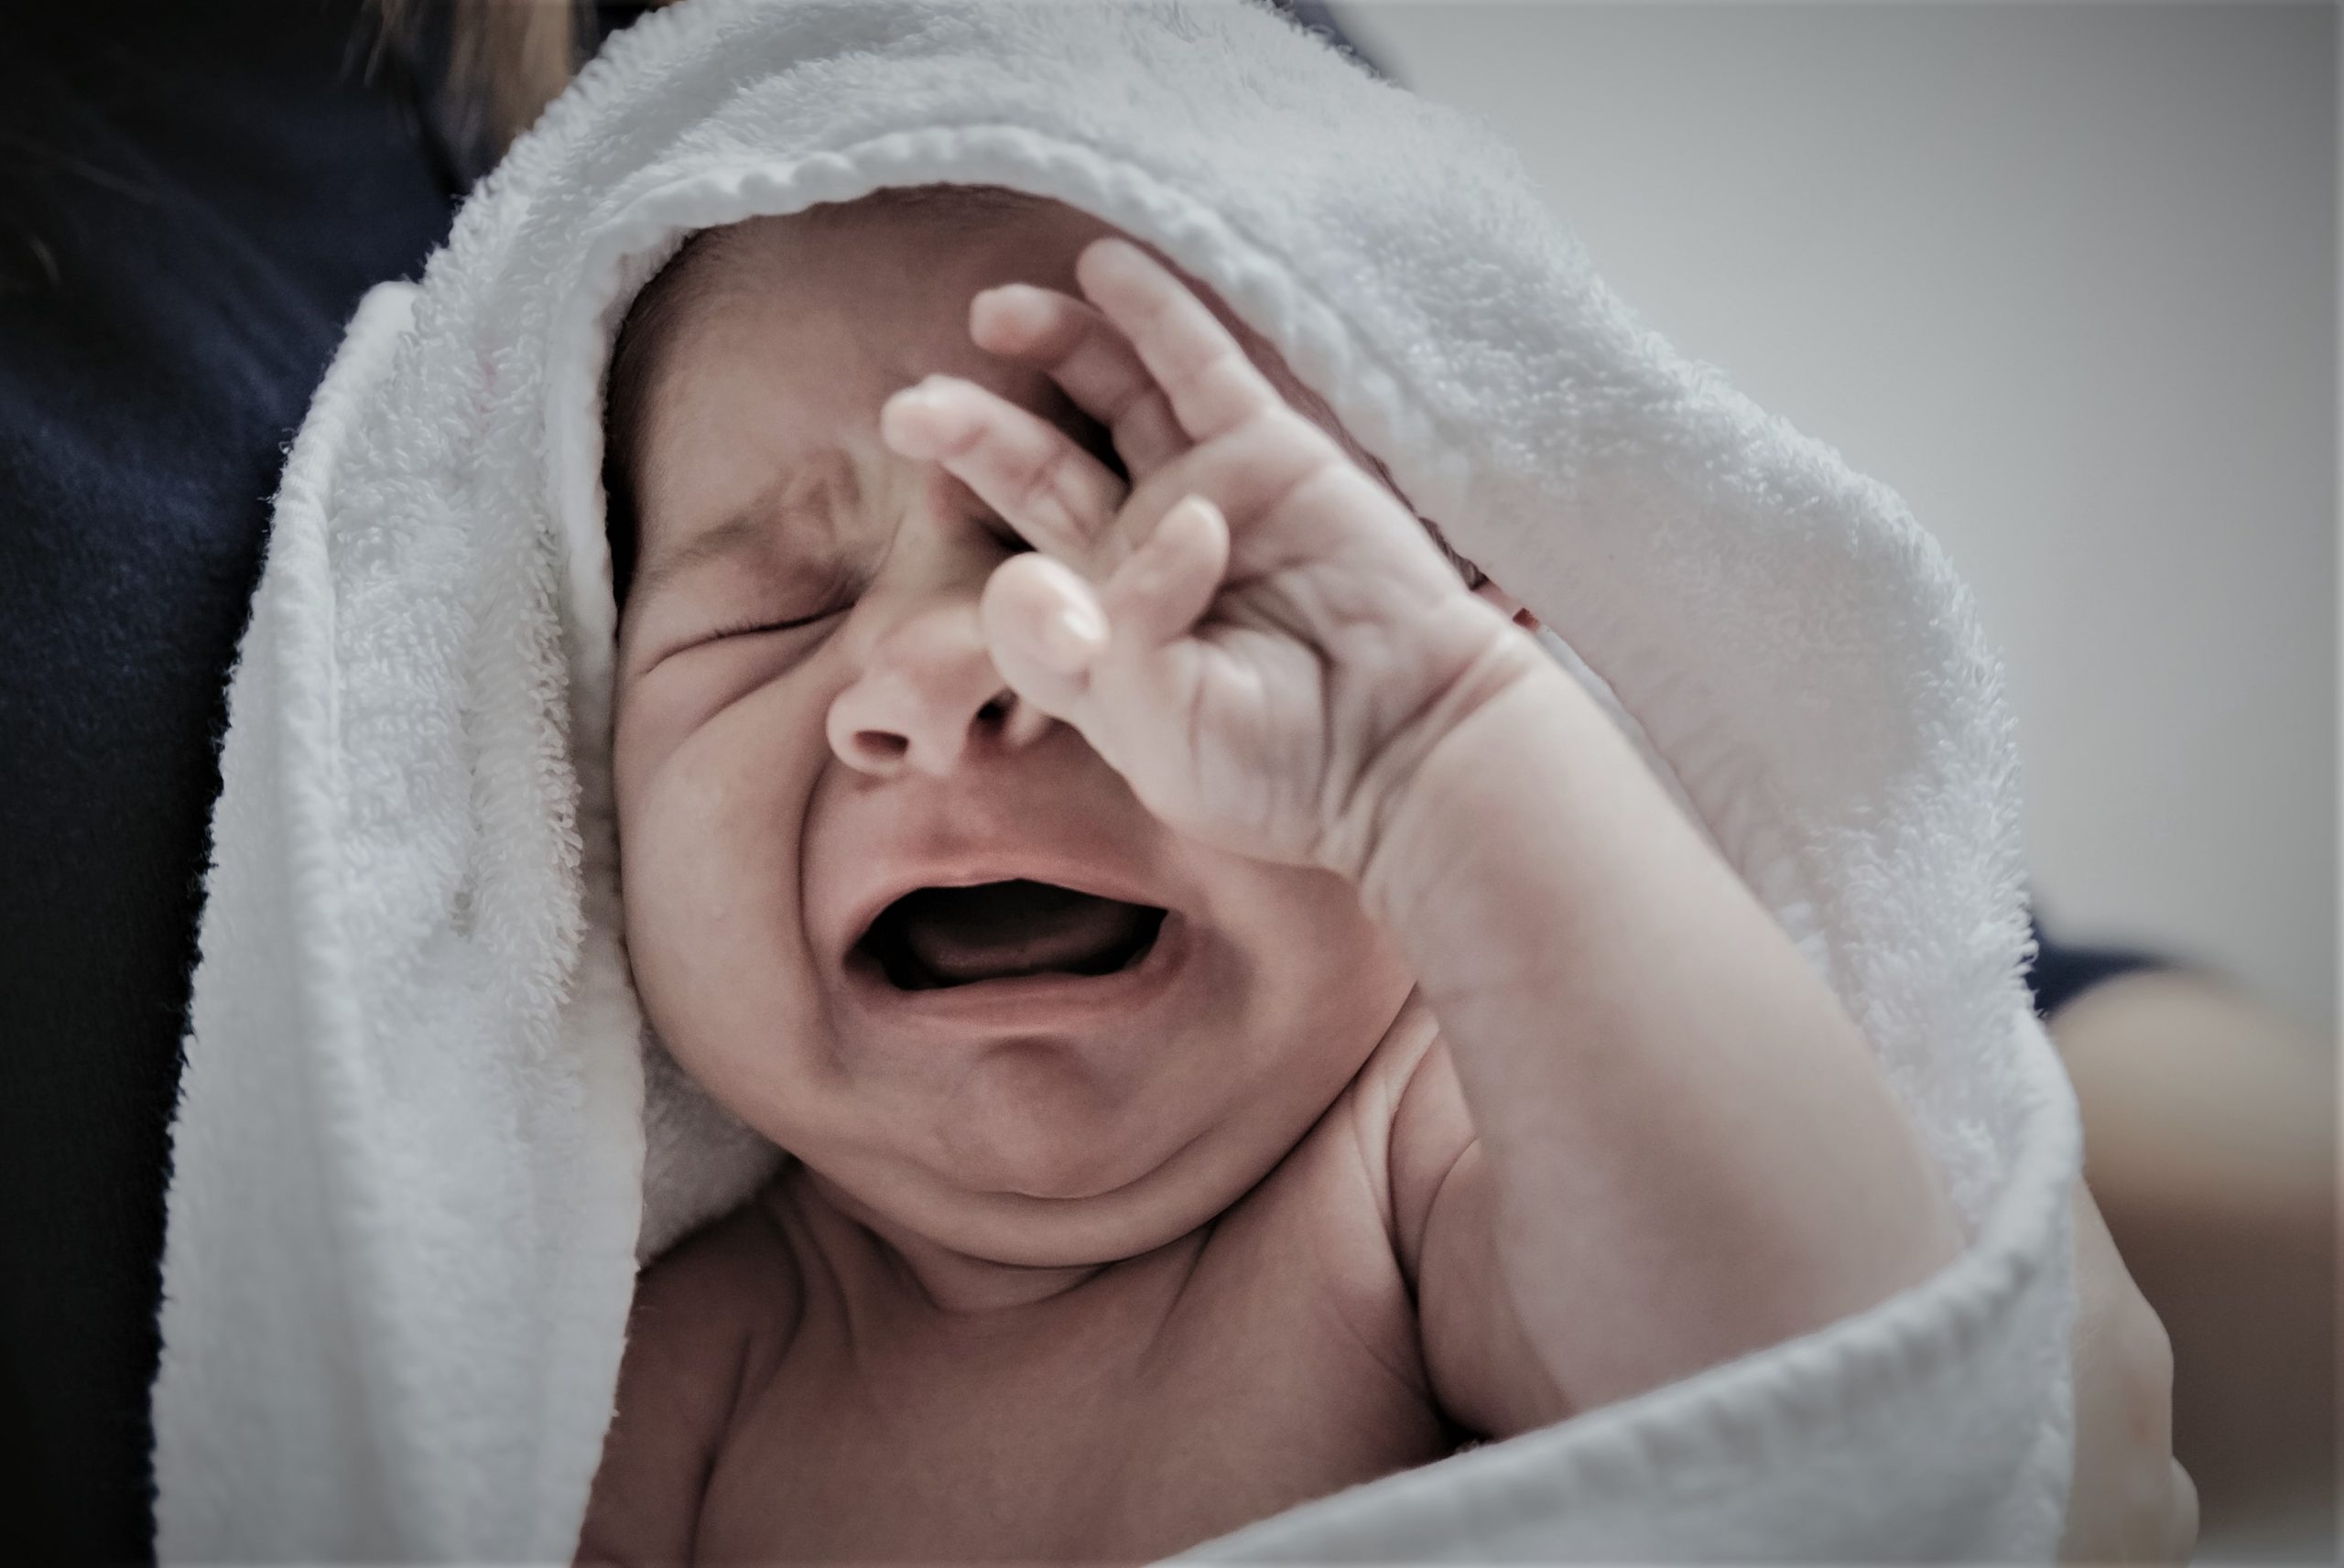 newborn baby girl crying 46VJHCF3 scaled общество featured, Грузинская Православная Церковь, Джавахети, Крещение, Мария Липка, Паравани